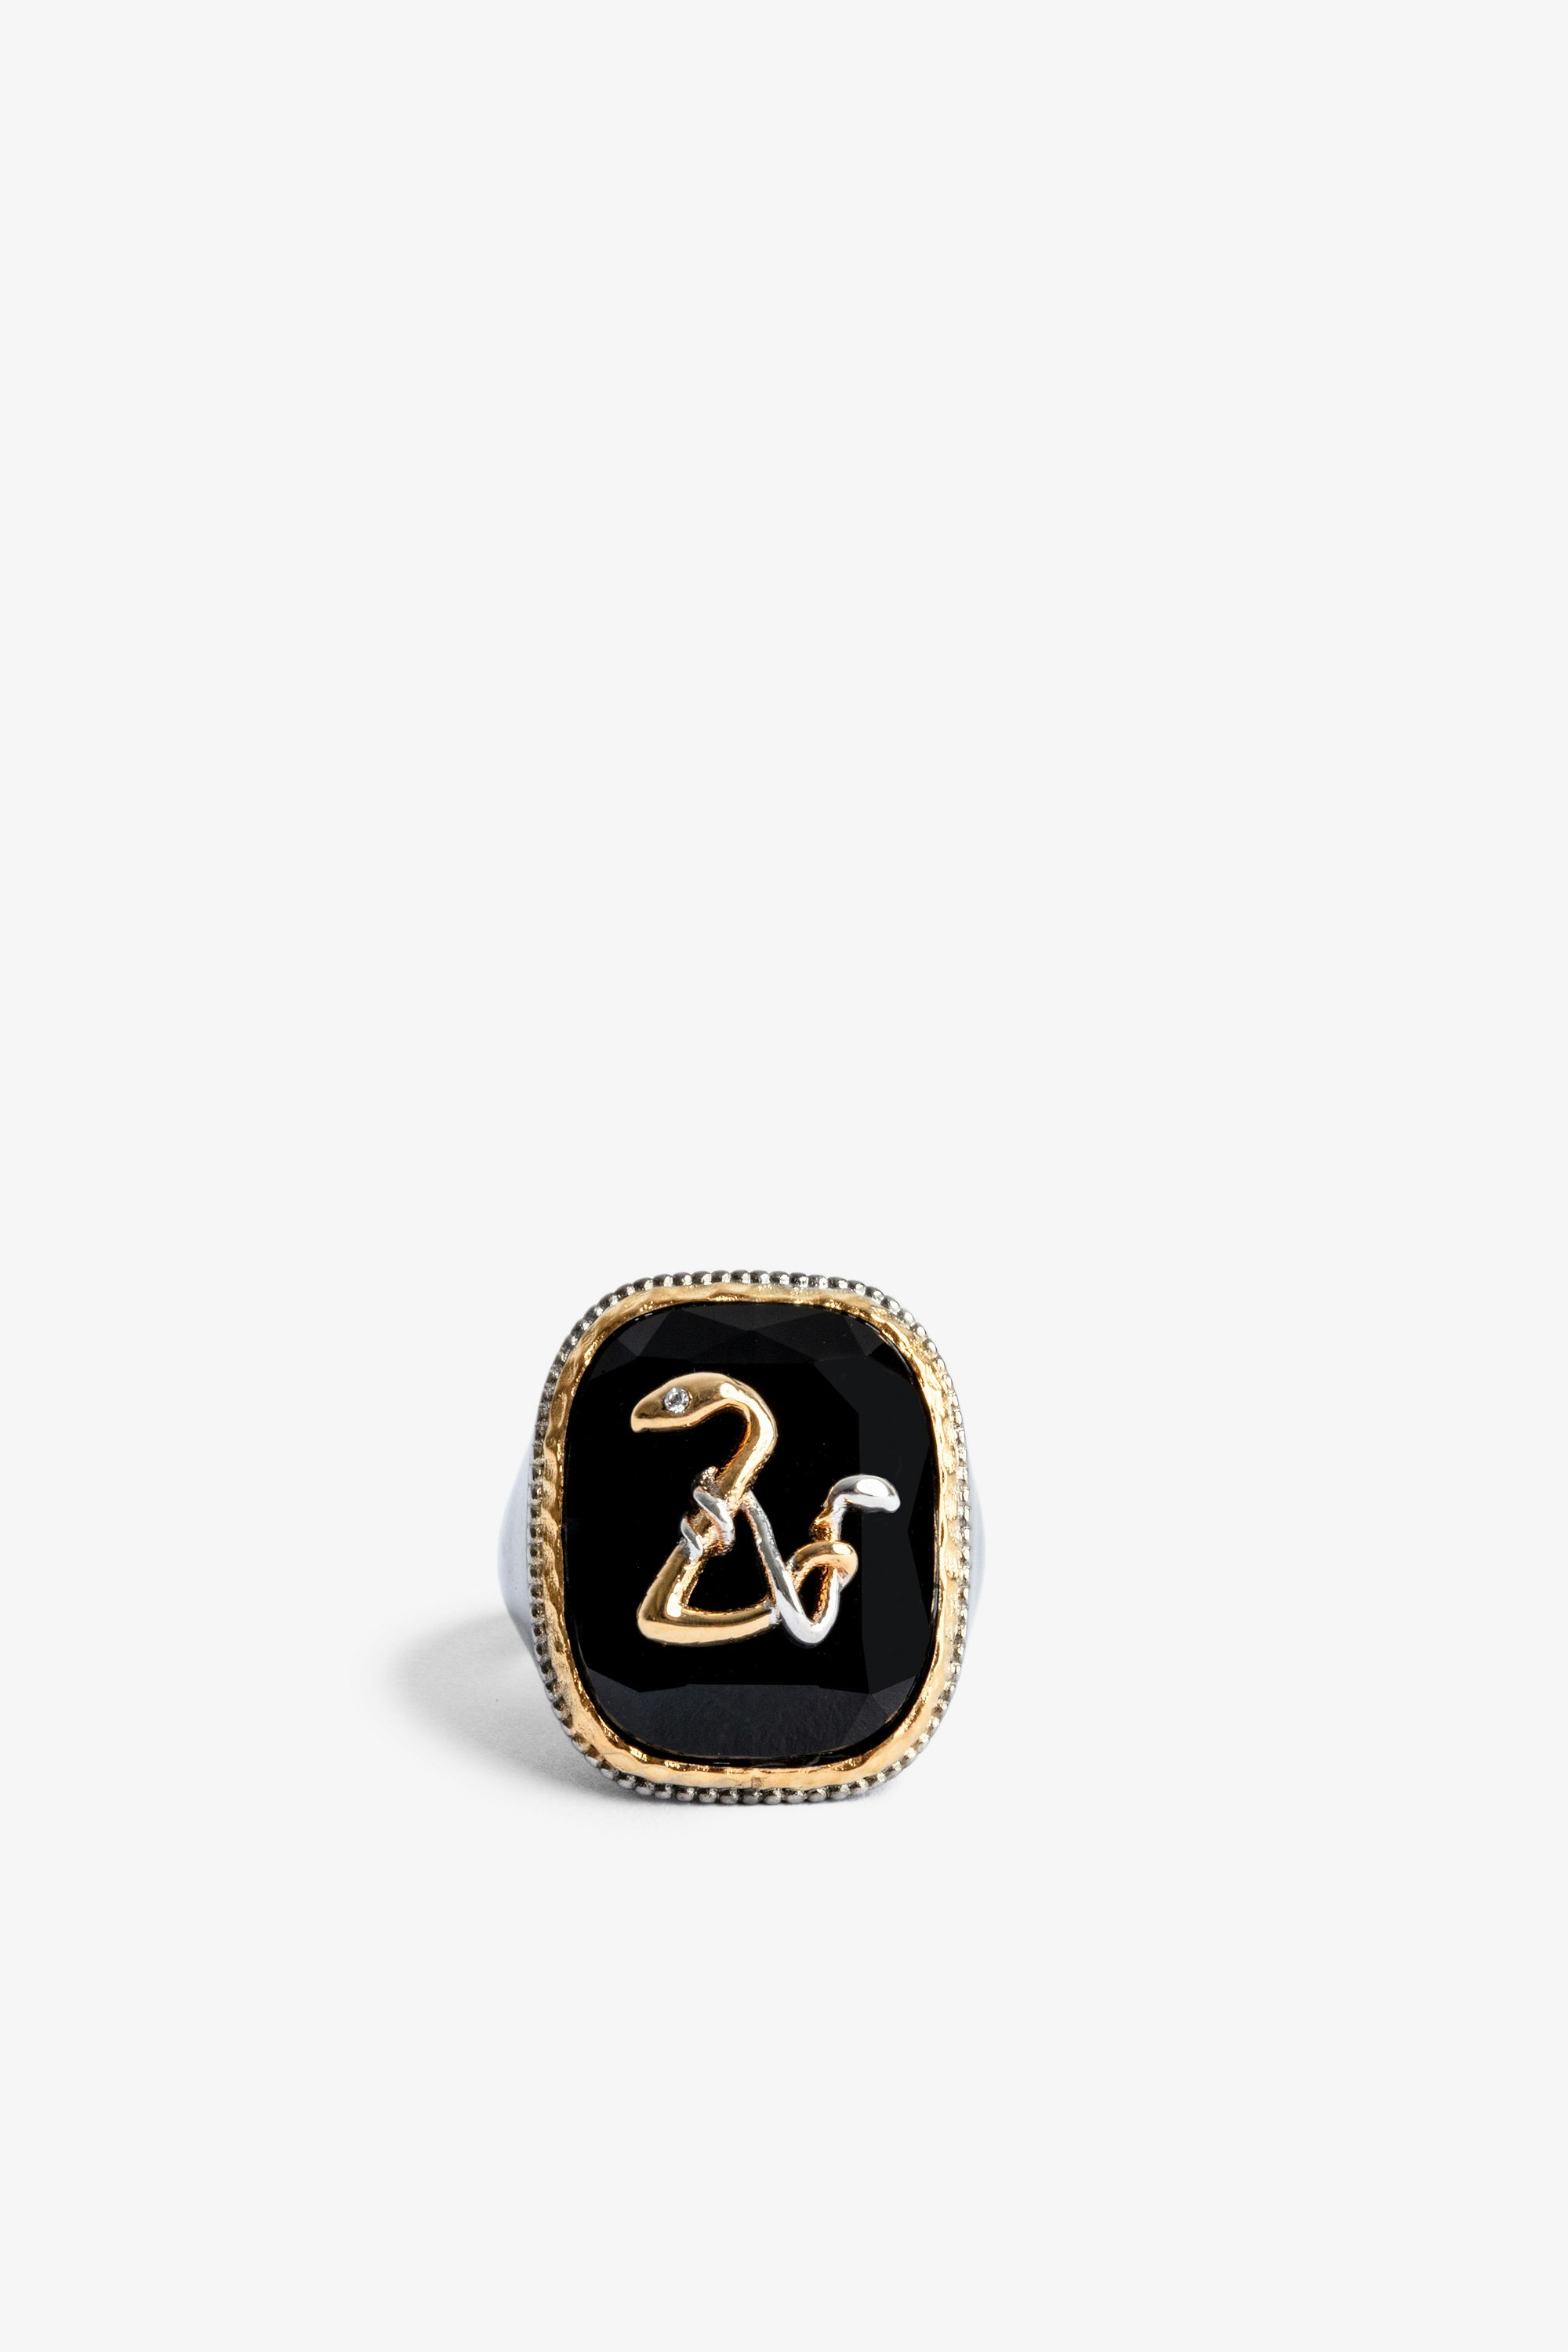 ZV Snake Signet Ring - Blackened and gold-tone metal signet ring.